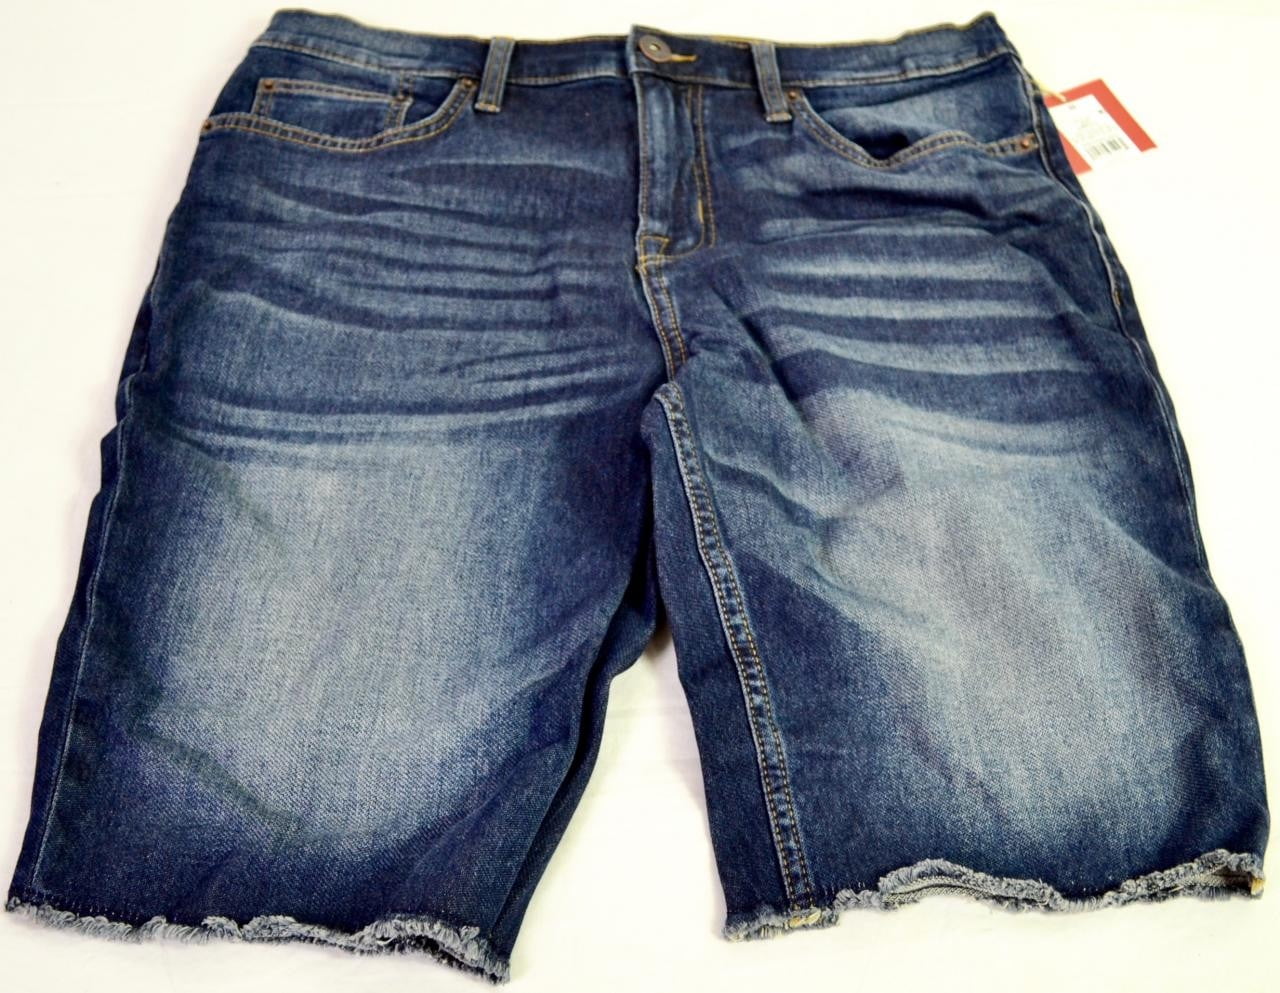 mossimo supply co jean shorts